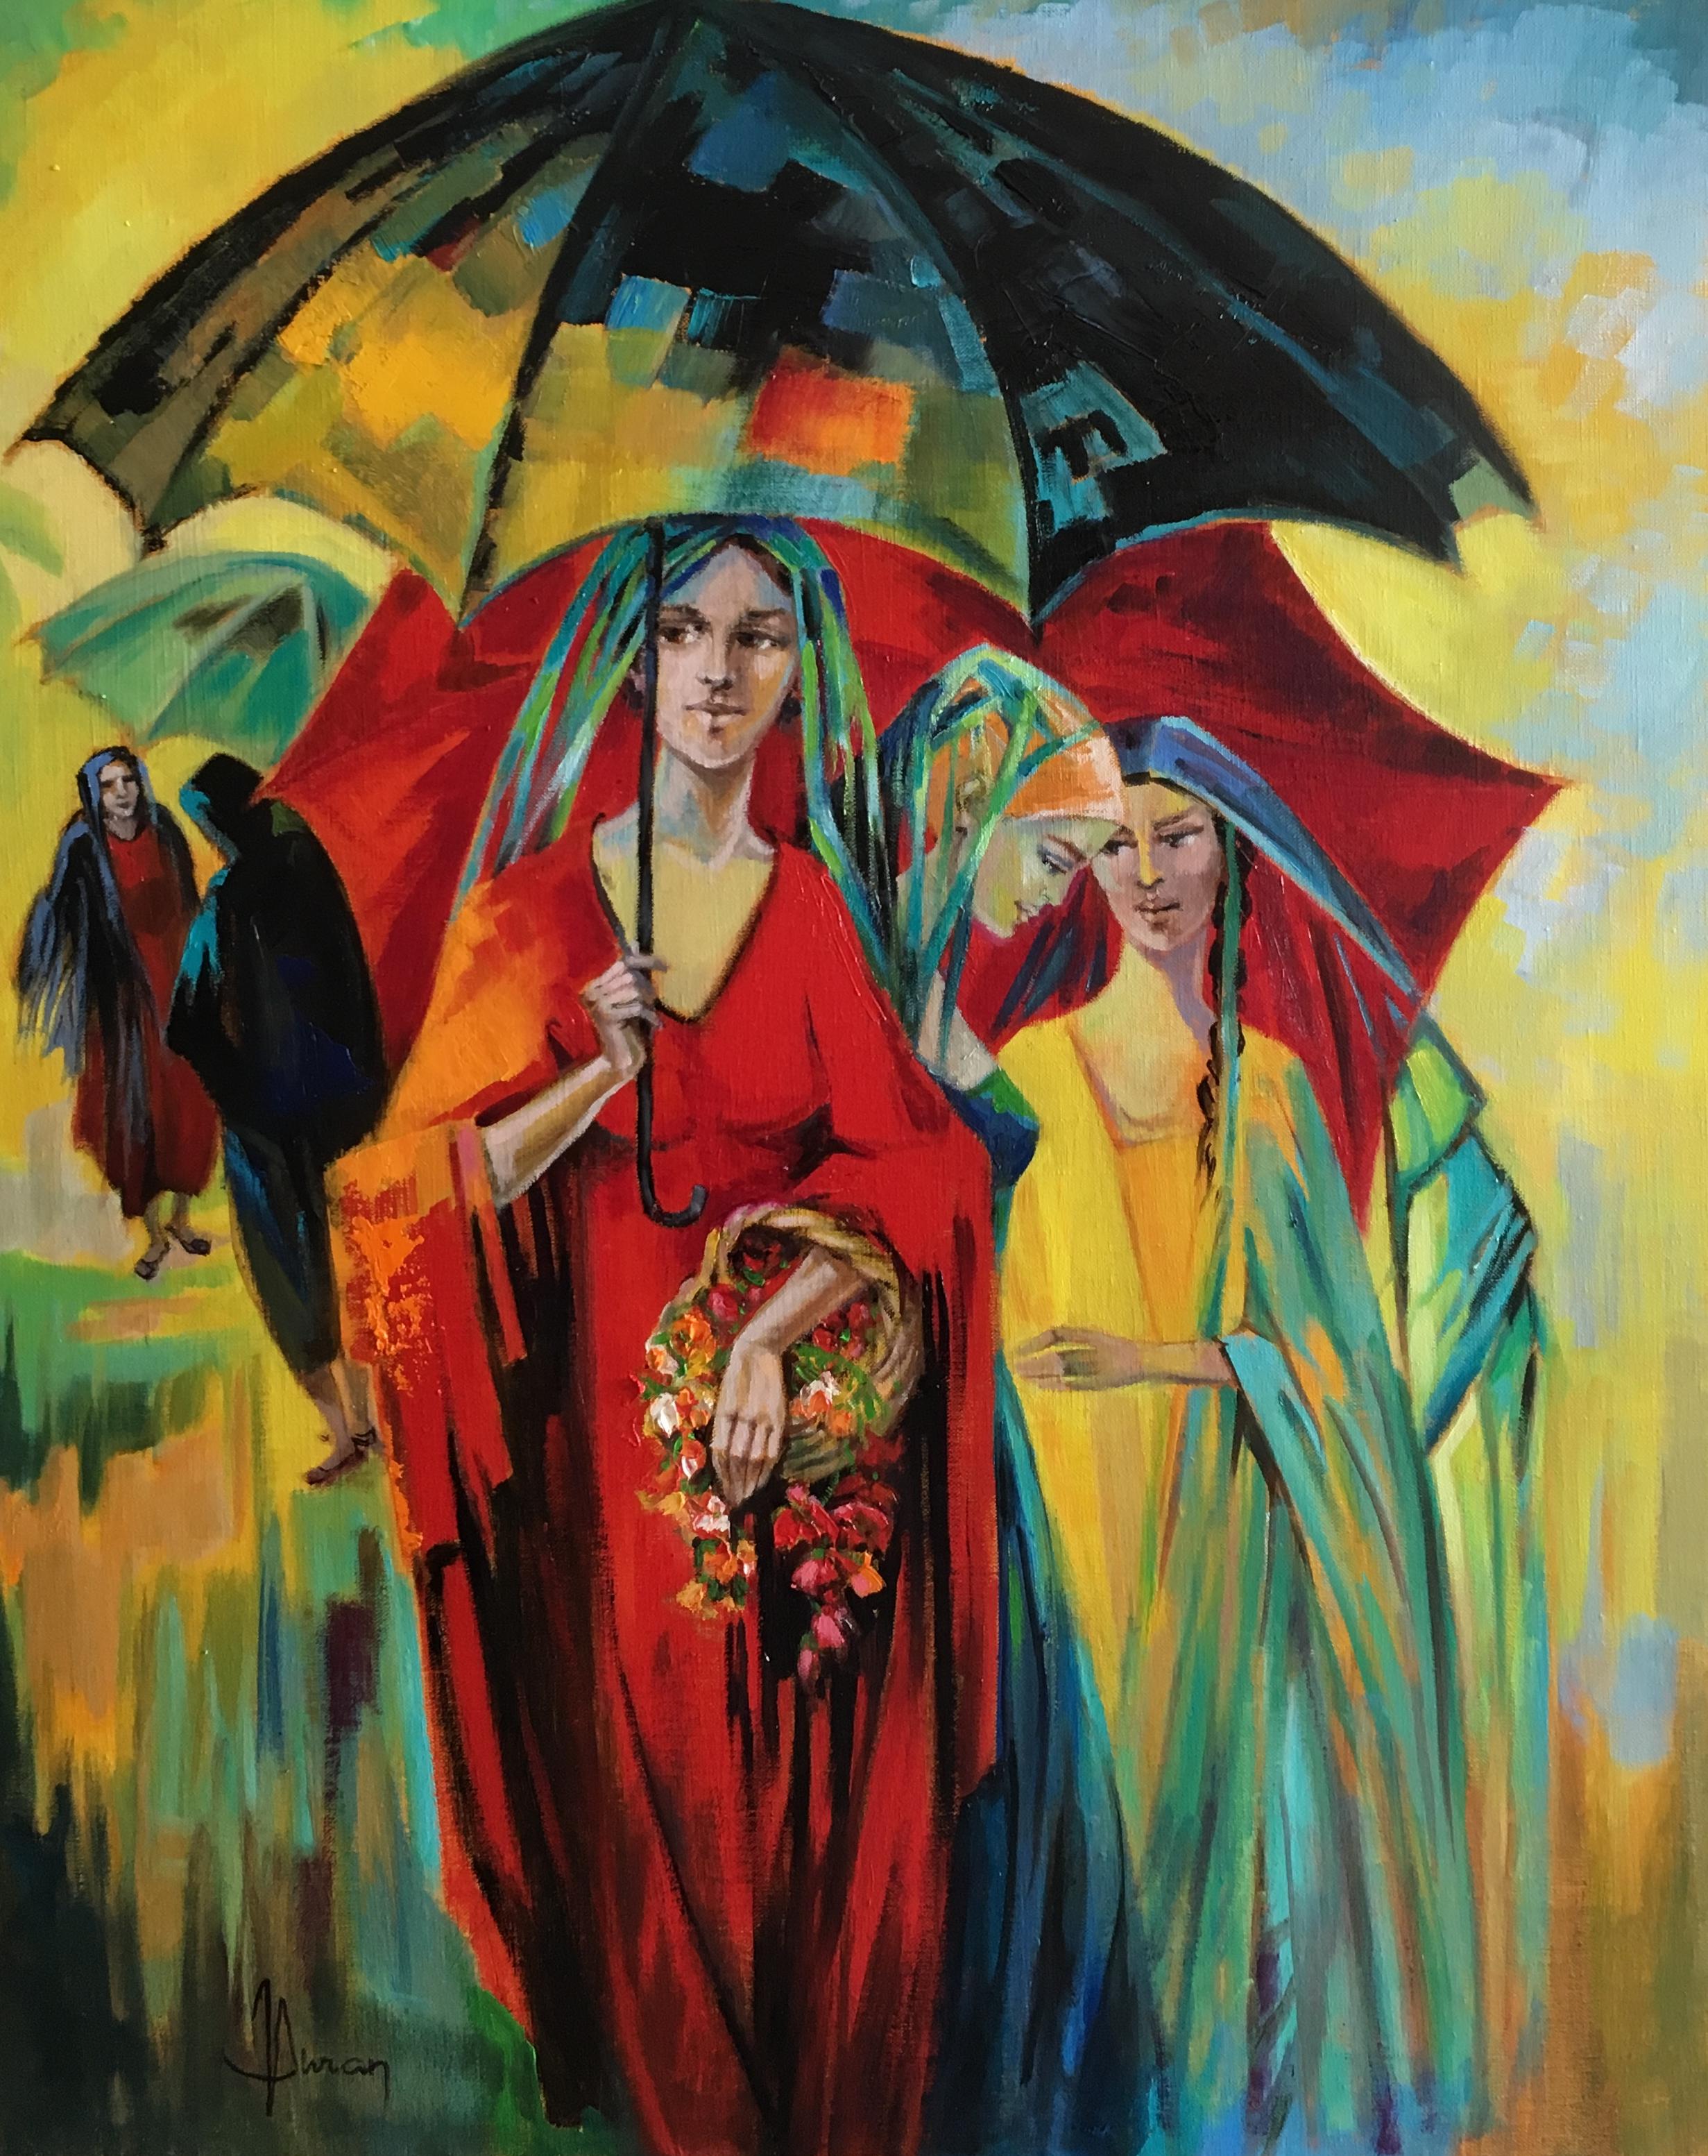 Jori Duran Figurative Painting - The umbrellas, oil on canvas, expressionist style